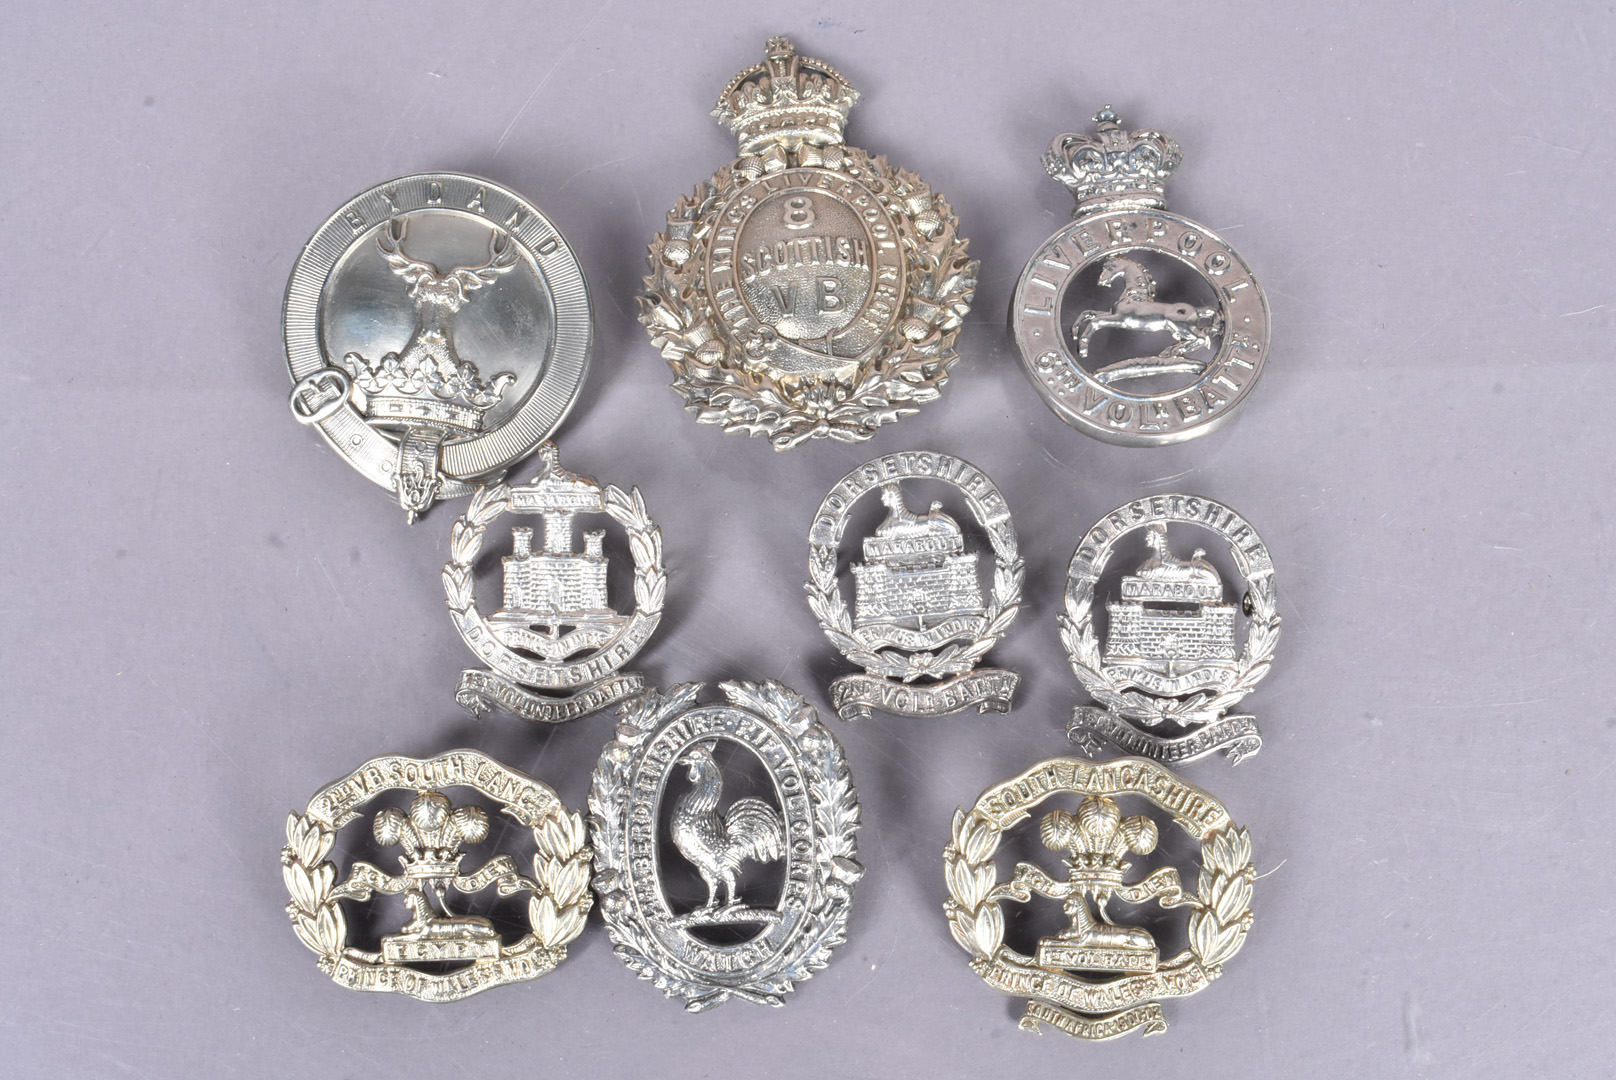 Volunteer Battalions, nine badges, comprising The Kings Liverpool Regiment 6th and 8th Volunteer